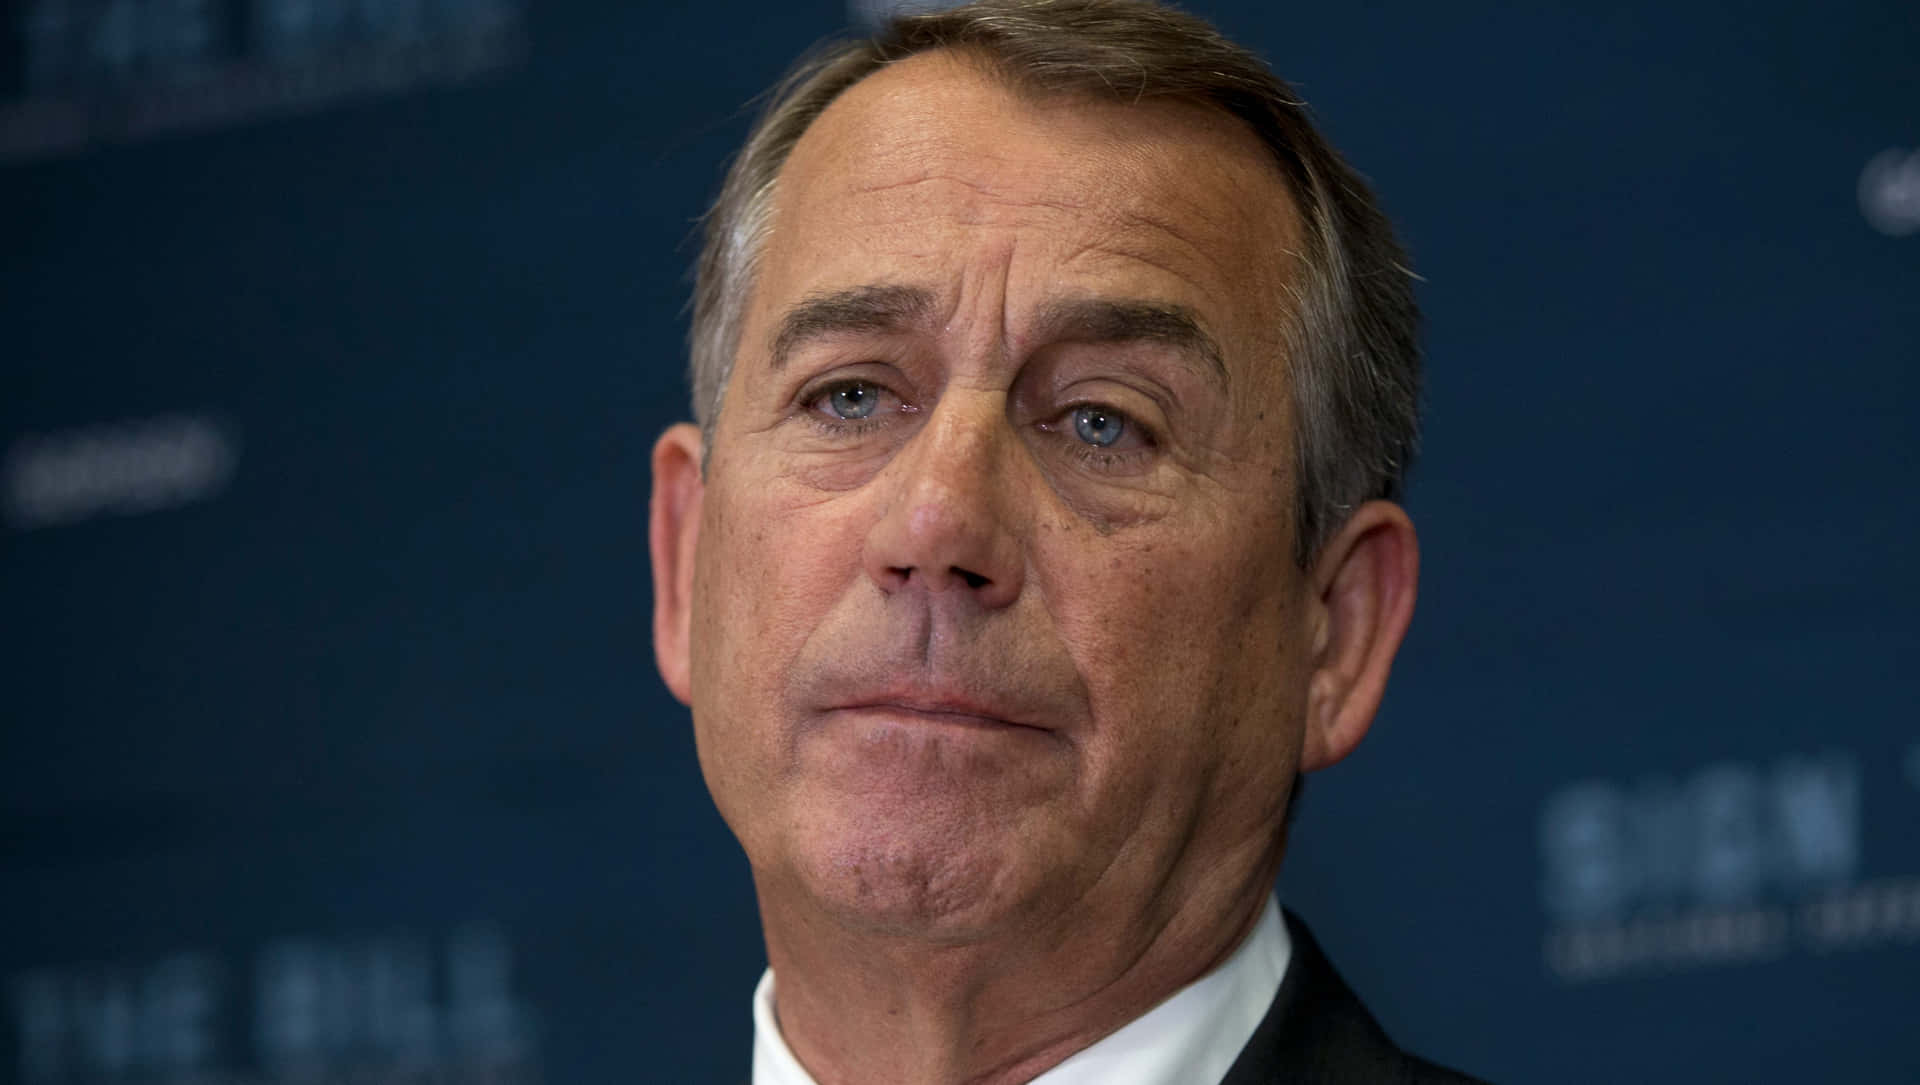 John Boehner Tearful Eyes Wallpaper